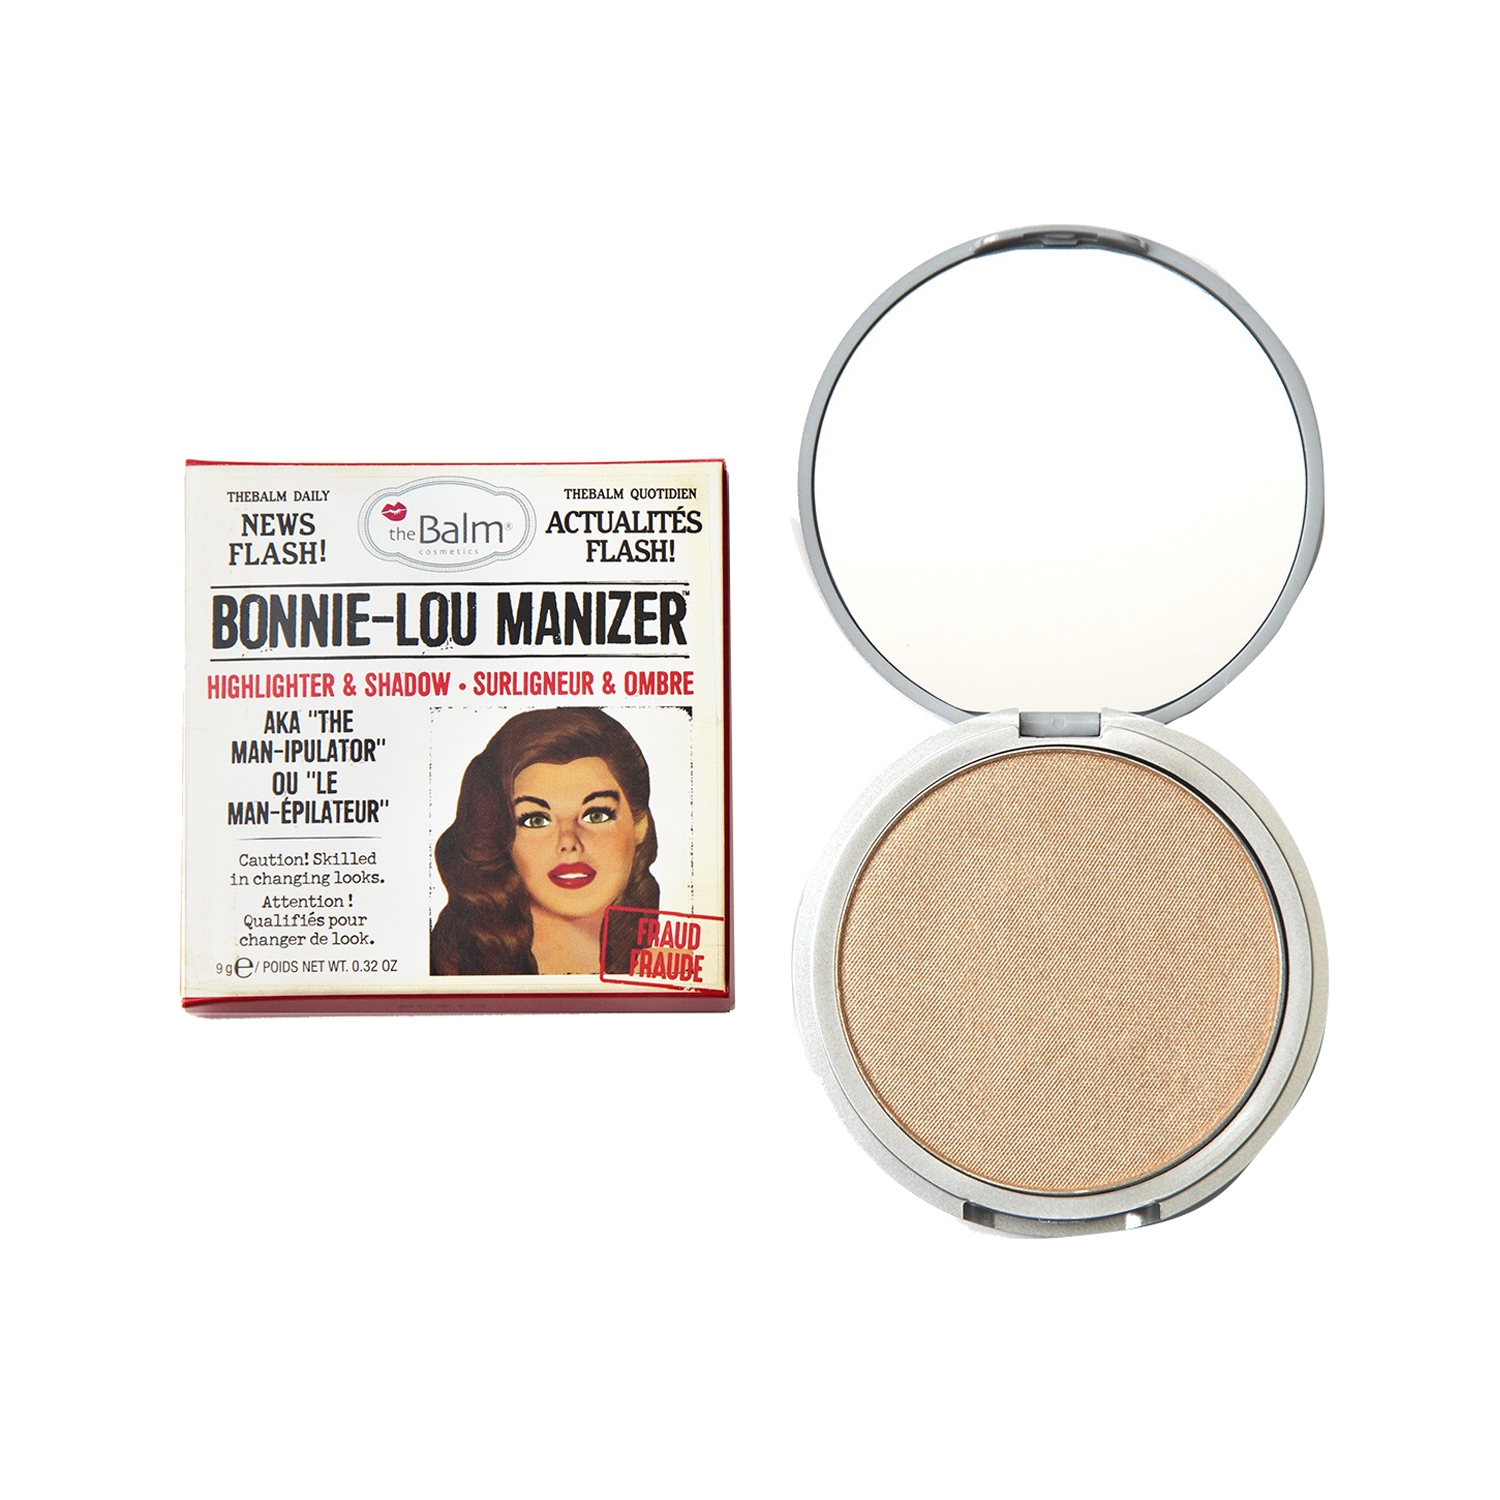 theBalm Cosmetics | theBalm Cosmetics Manizer Highlighter & Shadow - Bonnie-Lou (9g)